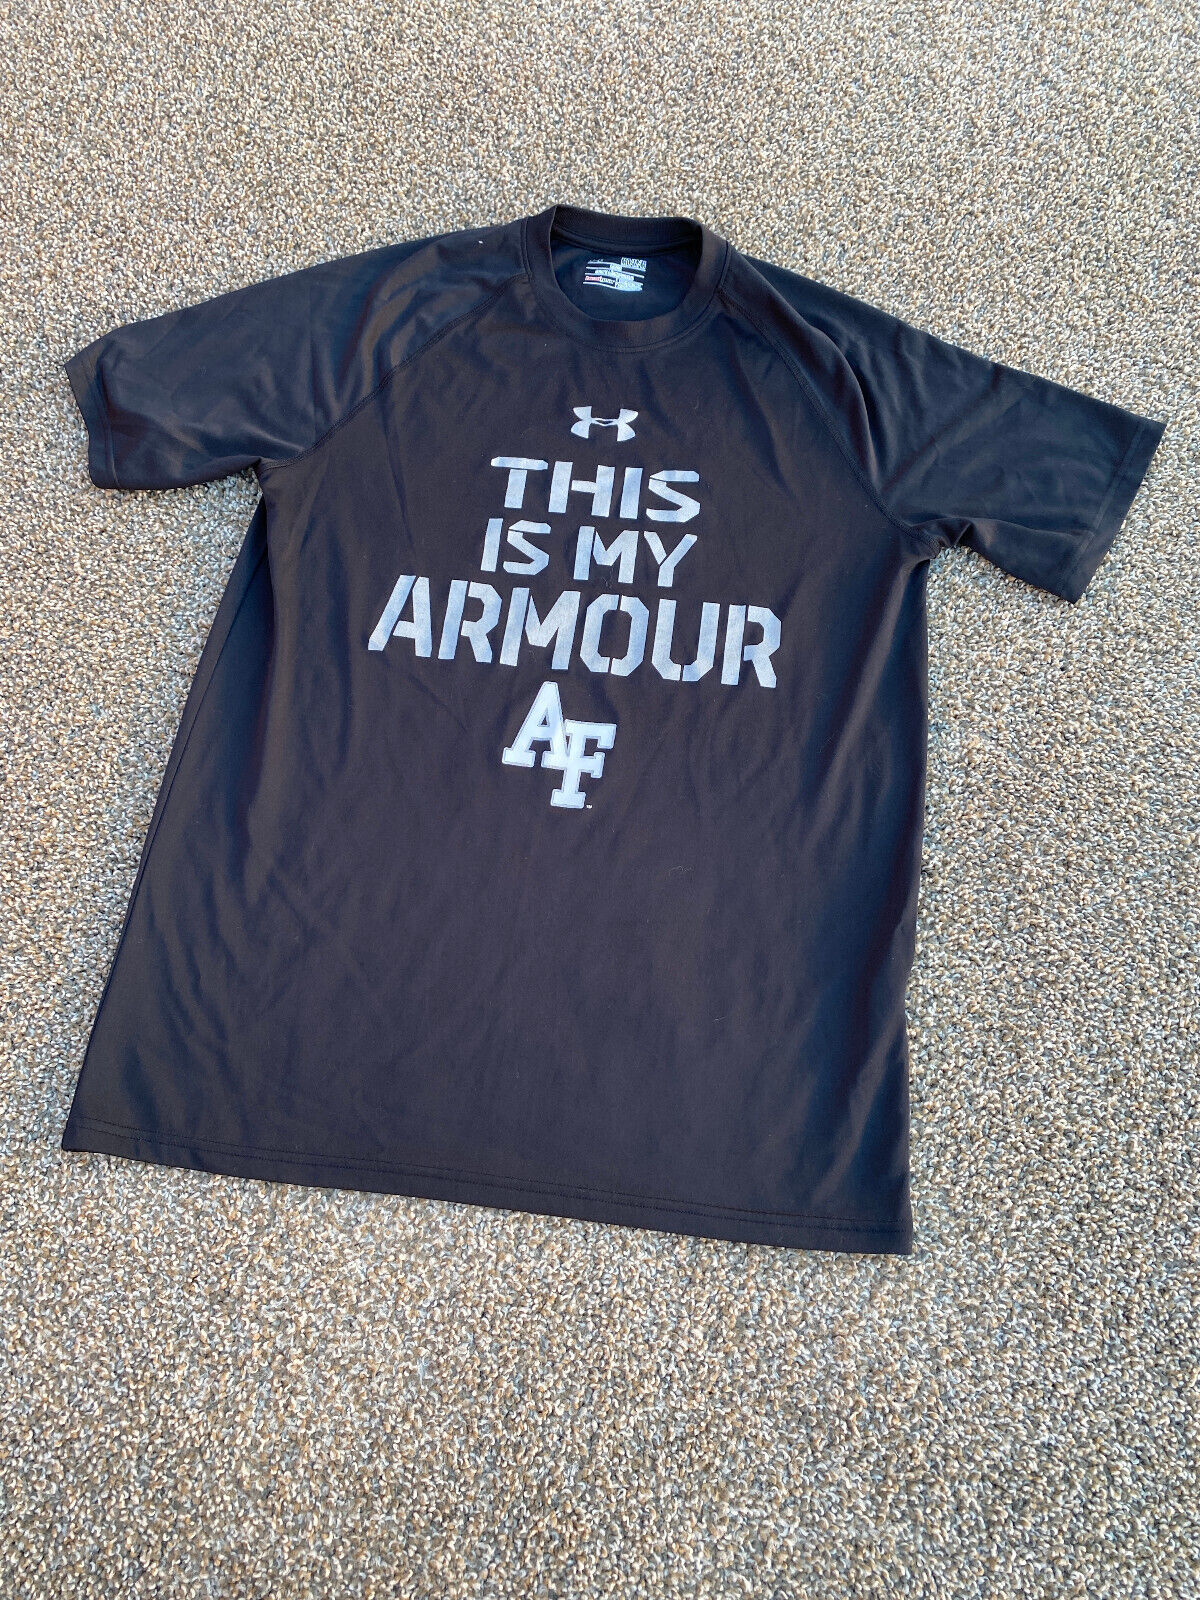 Under Armour Air Force Falcons Shirt Mens M Short Sleeve is My Armour | eBay